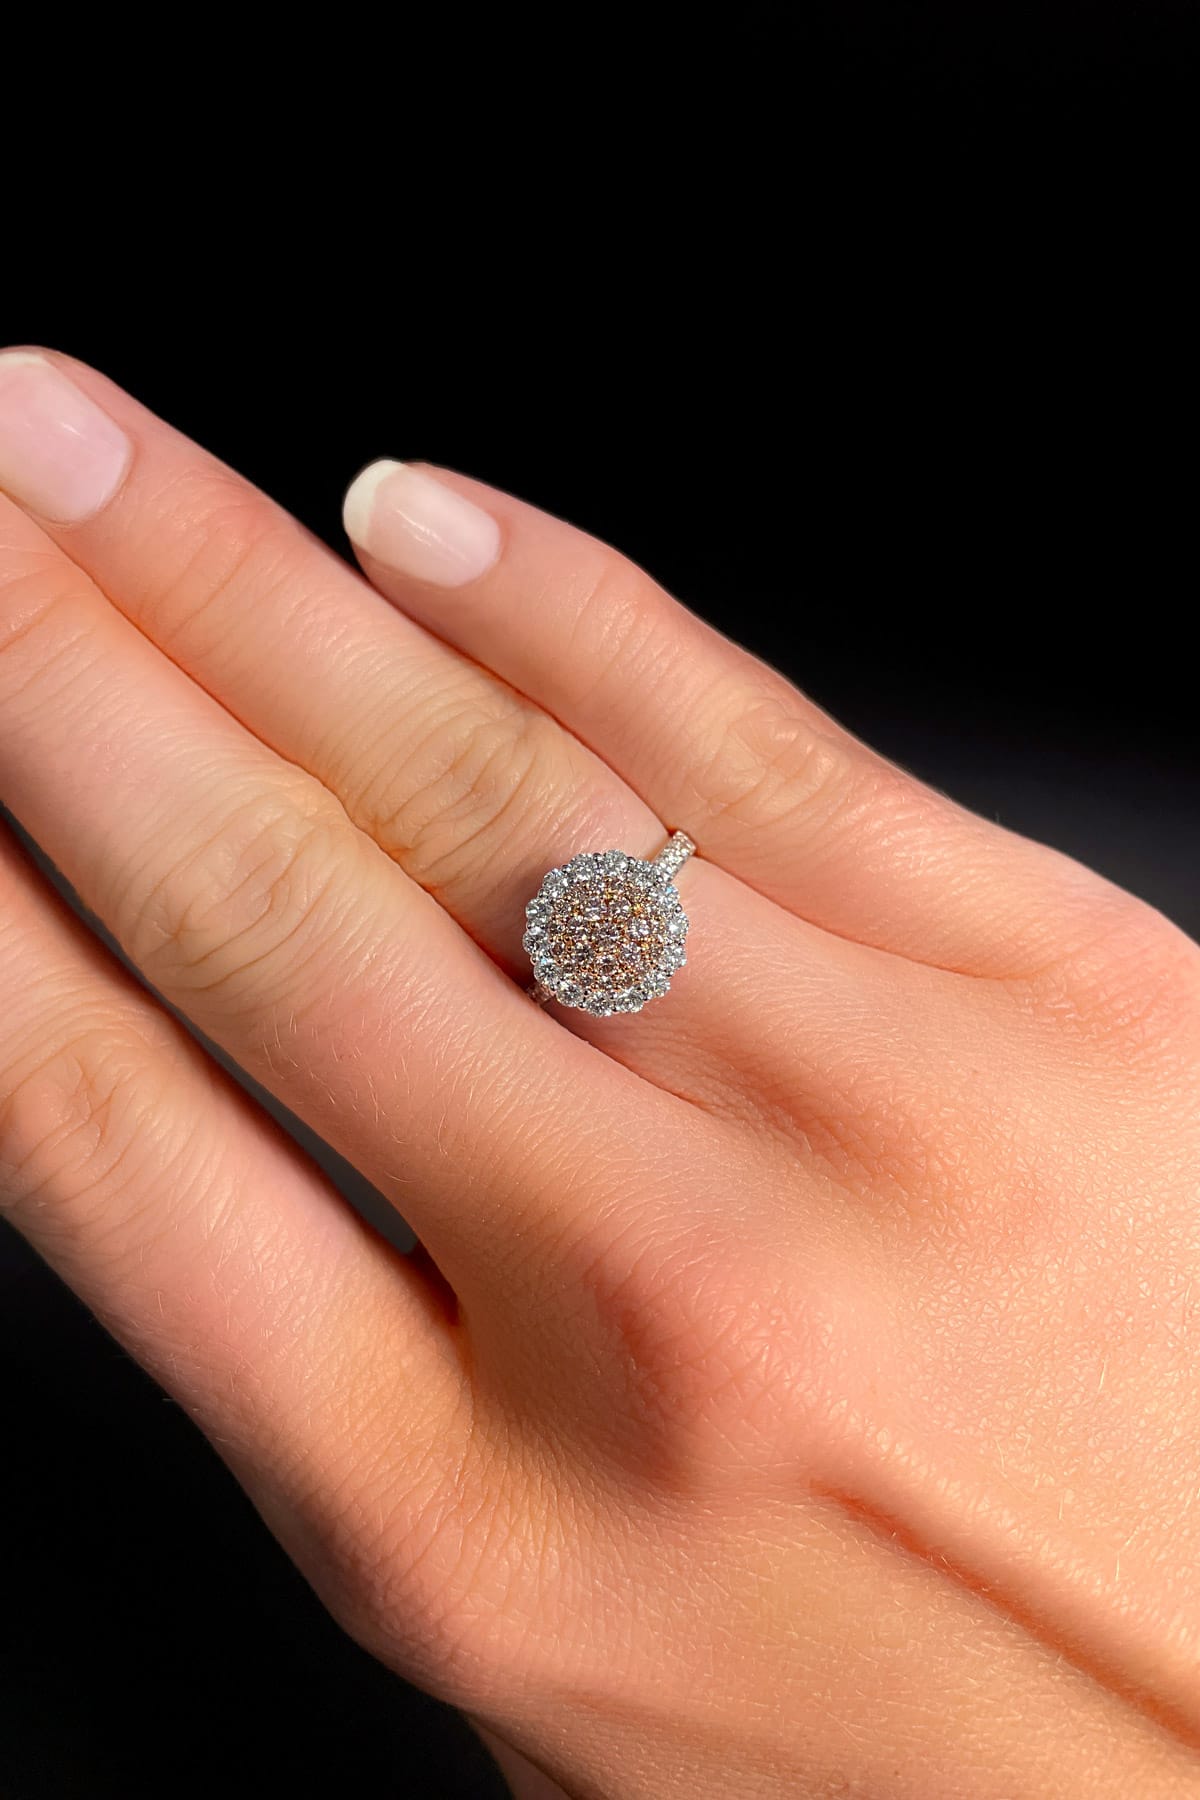 18 Carat White & Rose Gold Argyle Pink Diamond Ring available at LeGassick Diamonds and Jewellery Gold Coast, Australia.